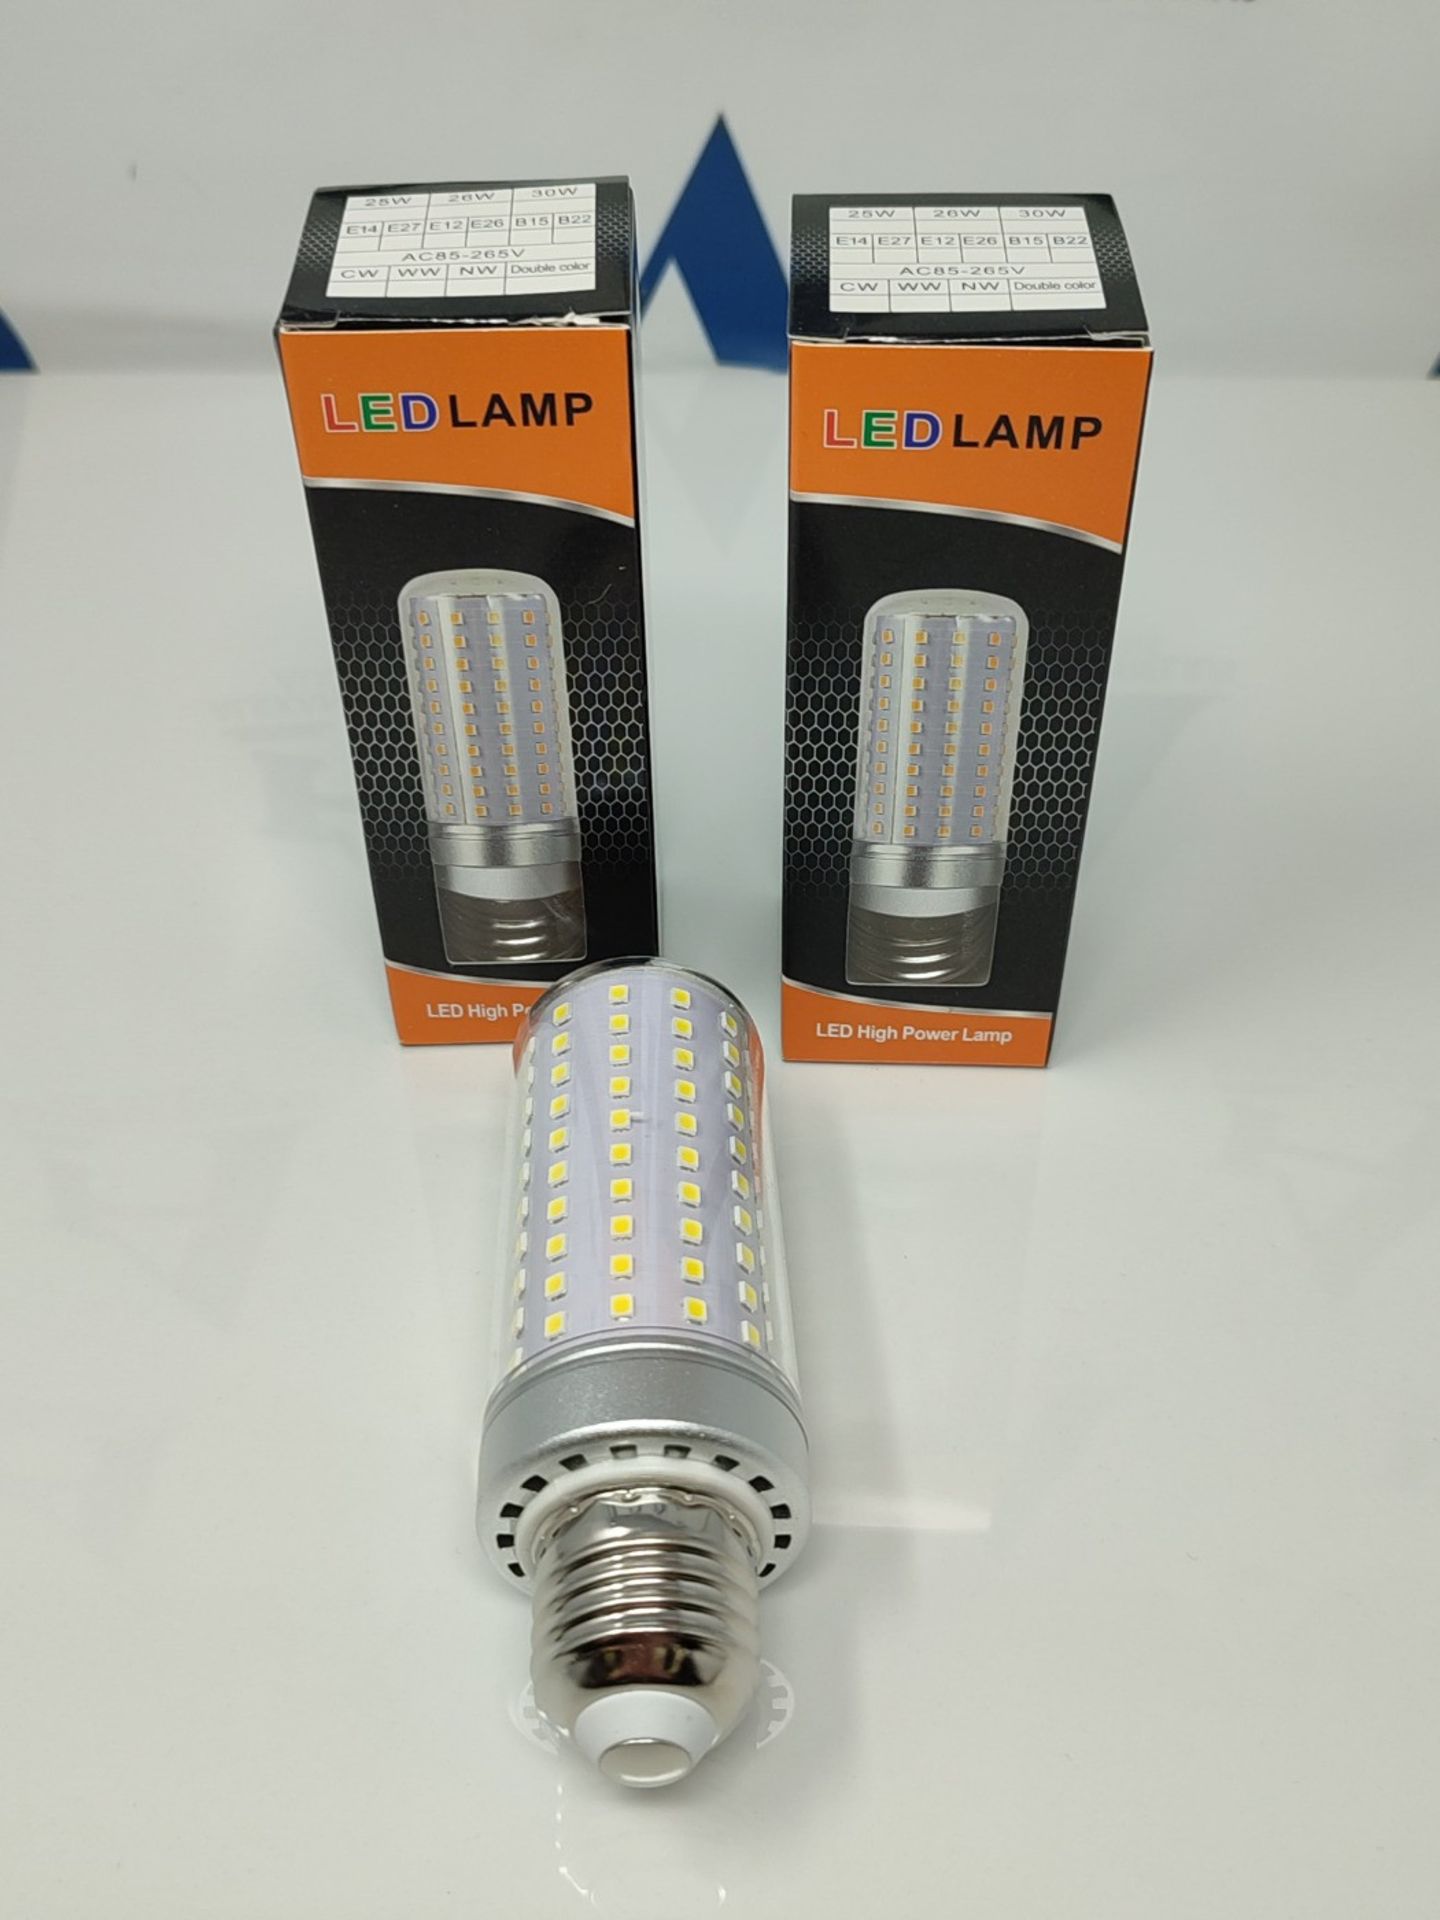 SAUGLAE 26W LED Light Bulbs, 200W Incandescent Bulbs Equivalent, E27 Large Edison Scre - Image 2 of 2